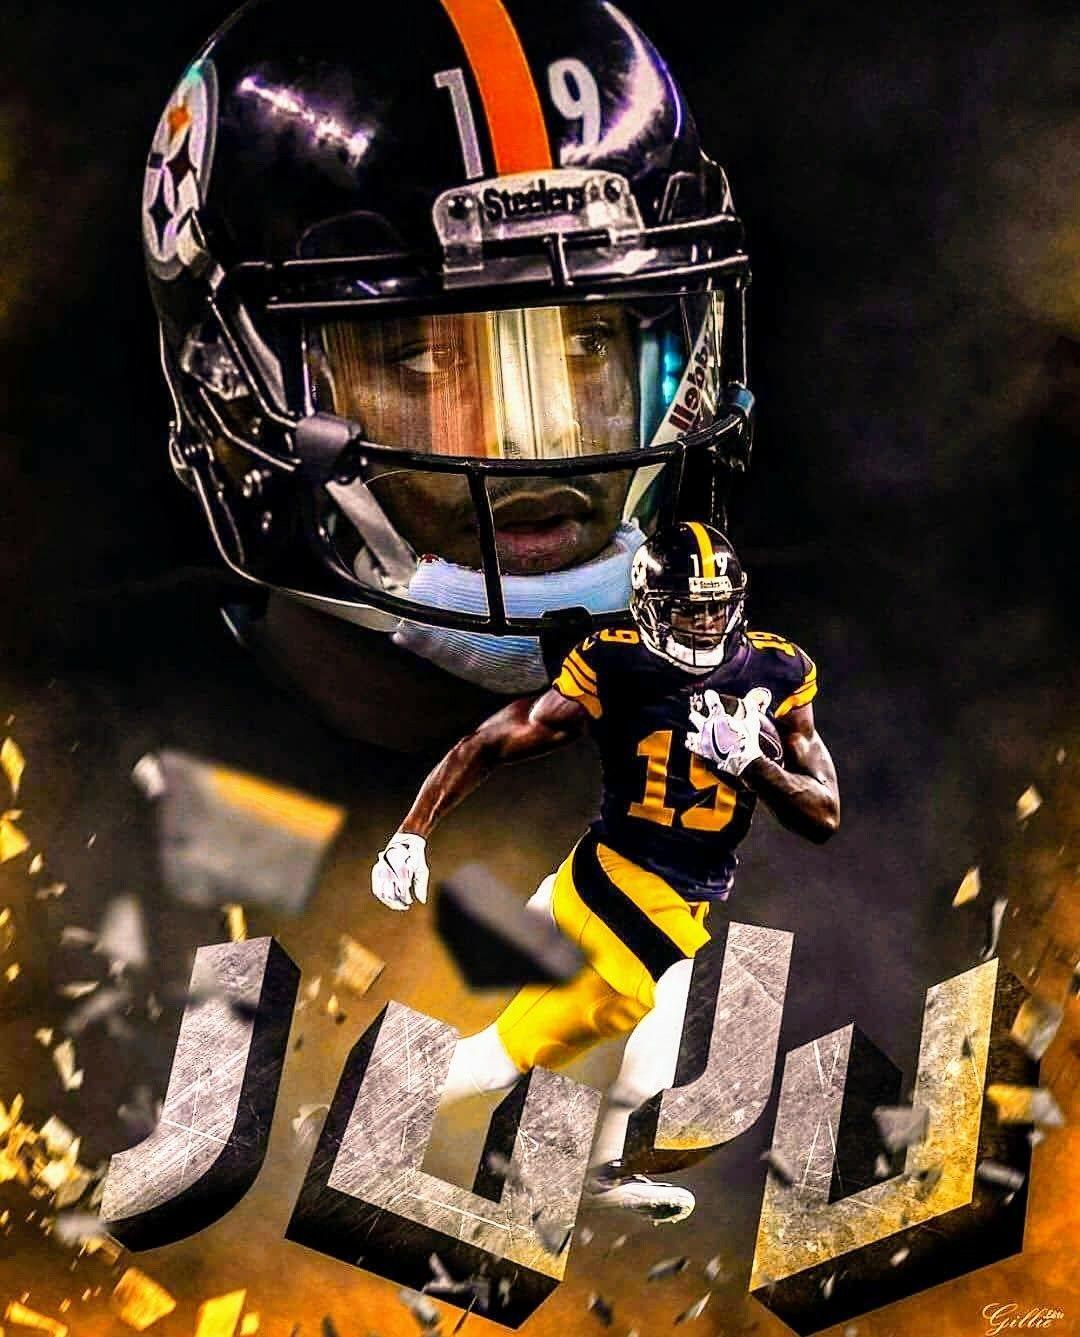 Best Pittsburgh Steelers Image image. Pittsburgh